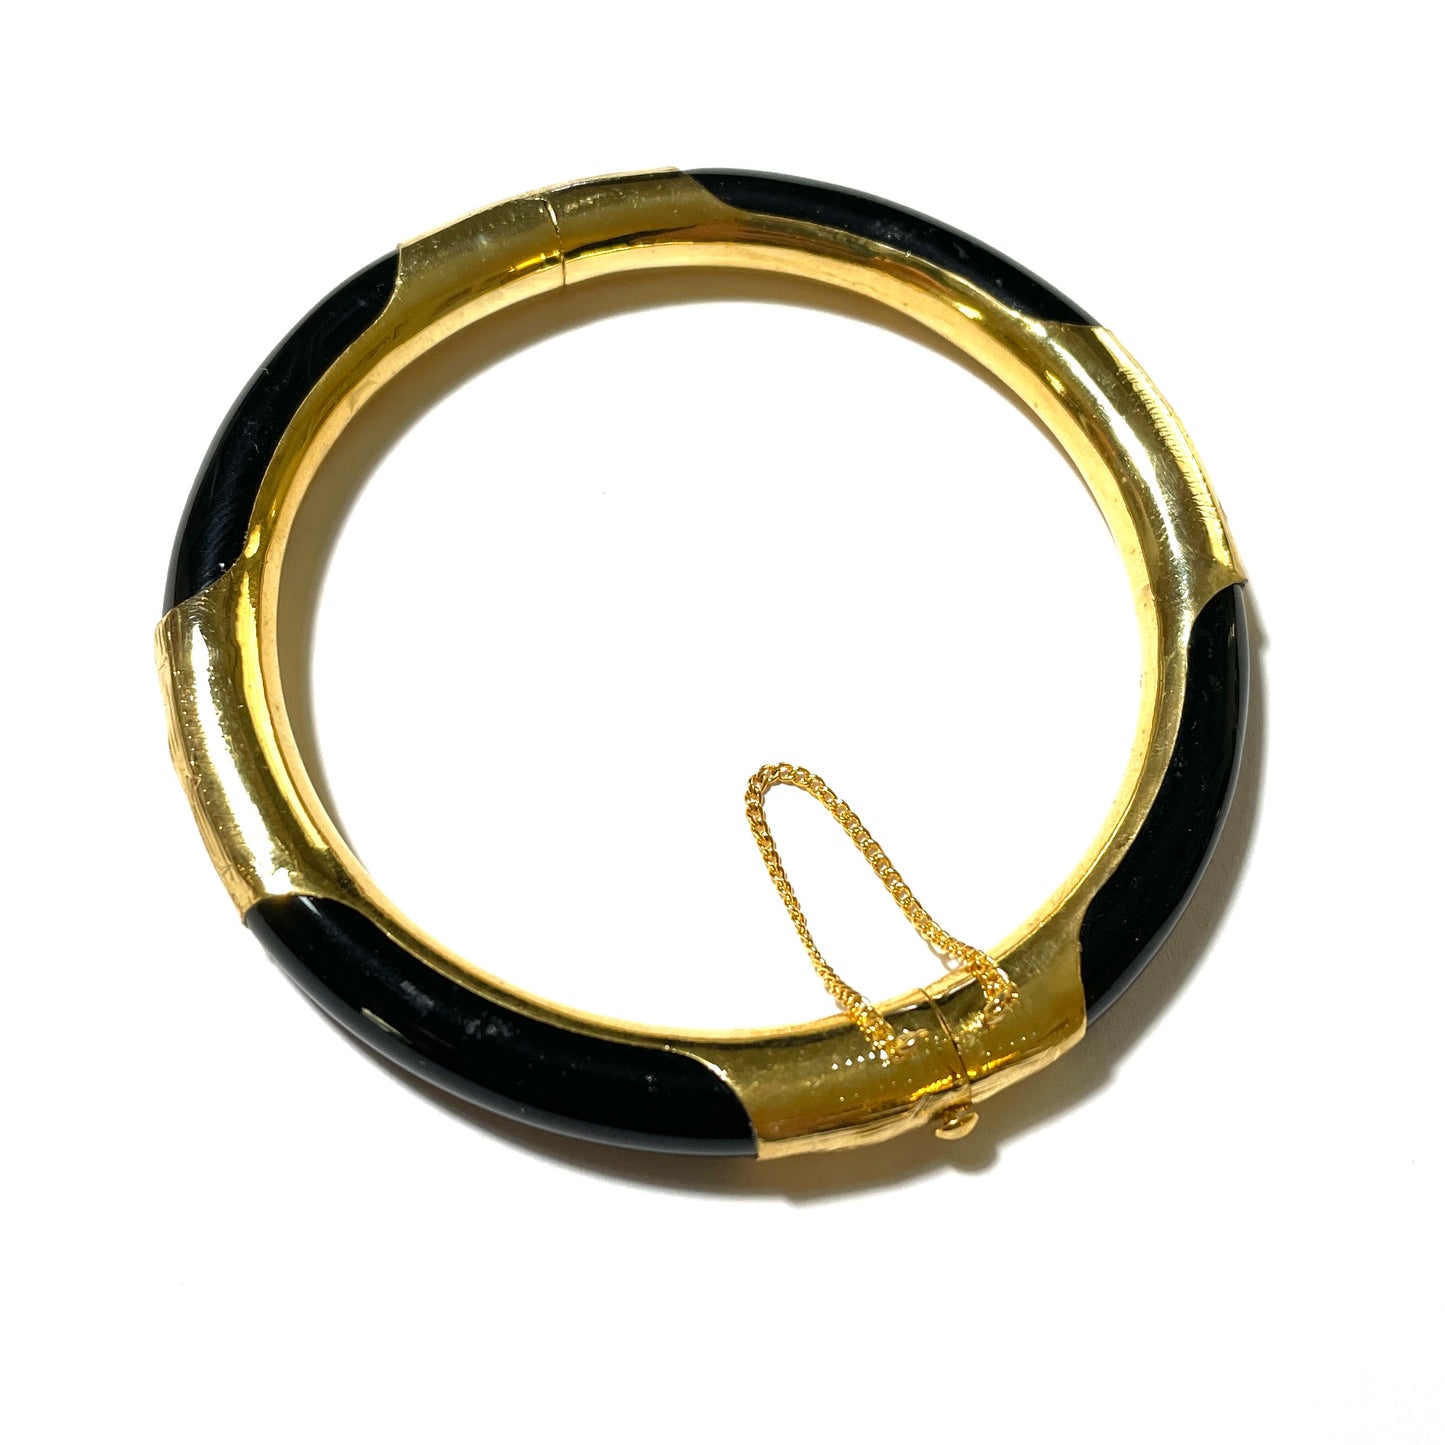 Stone Bangle Bracelet with Gold Fittings